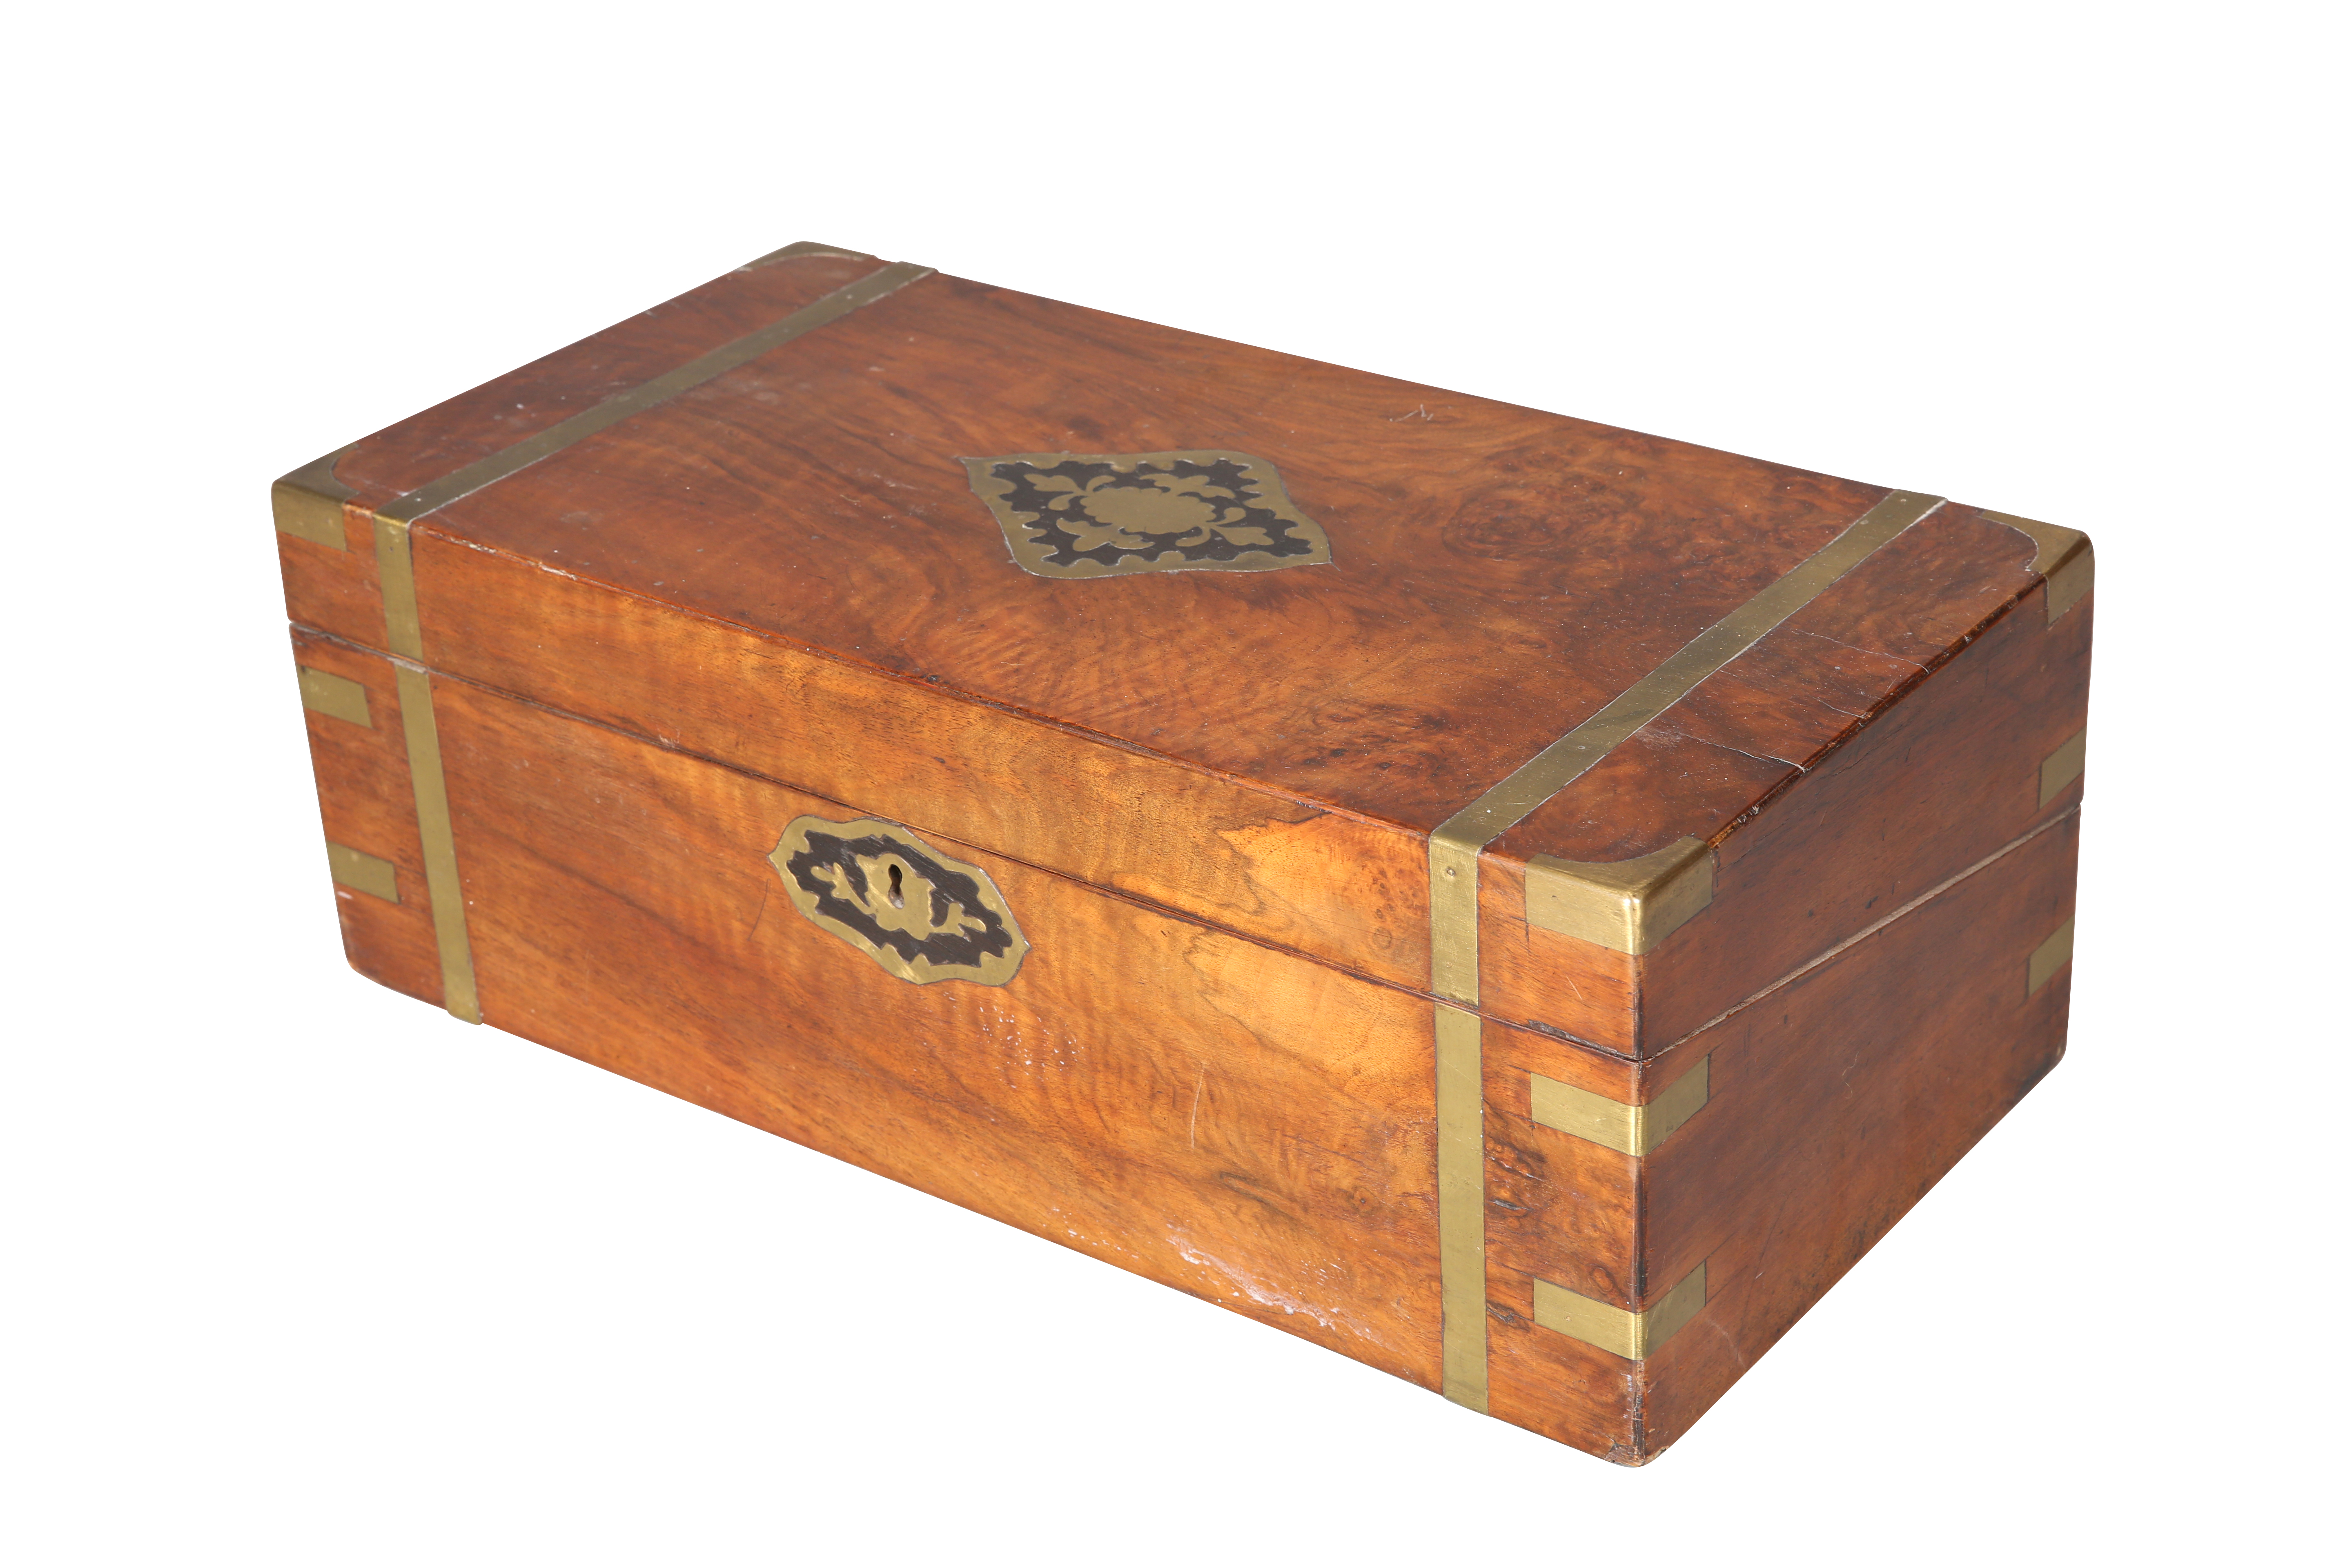 A 19TH CENTURY BRASS-BOUND WALNUT WRITING BOX